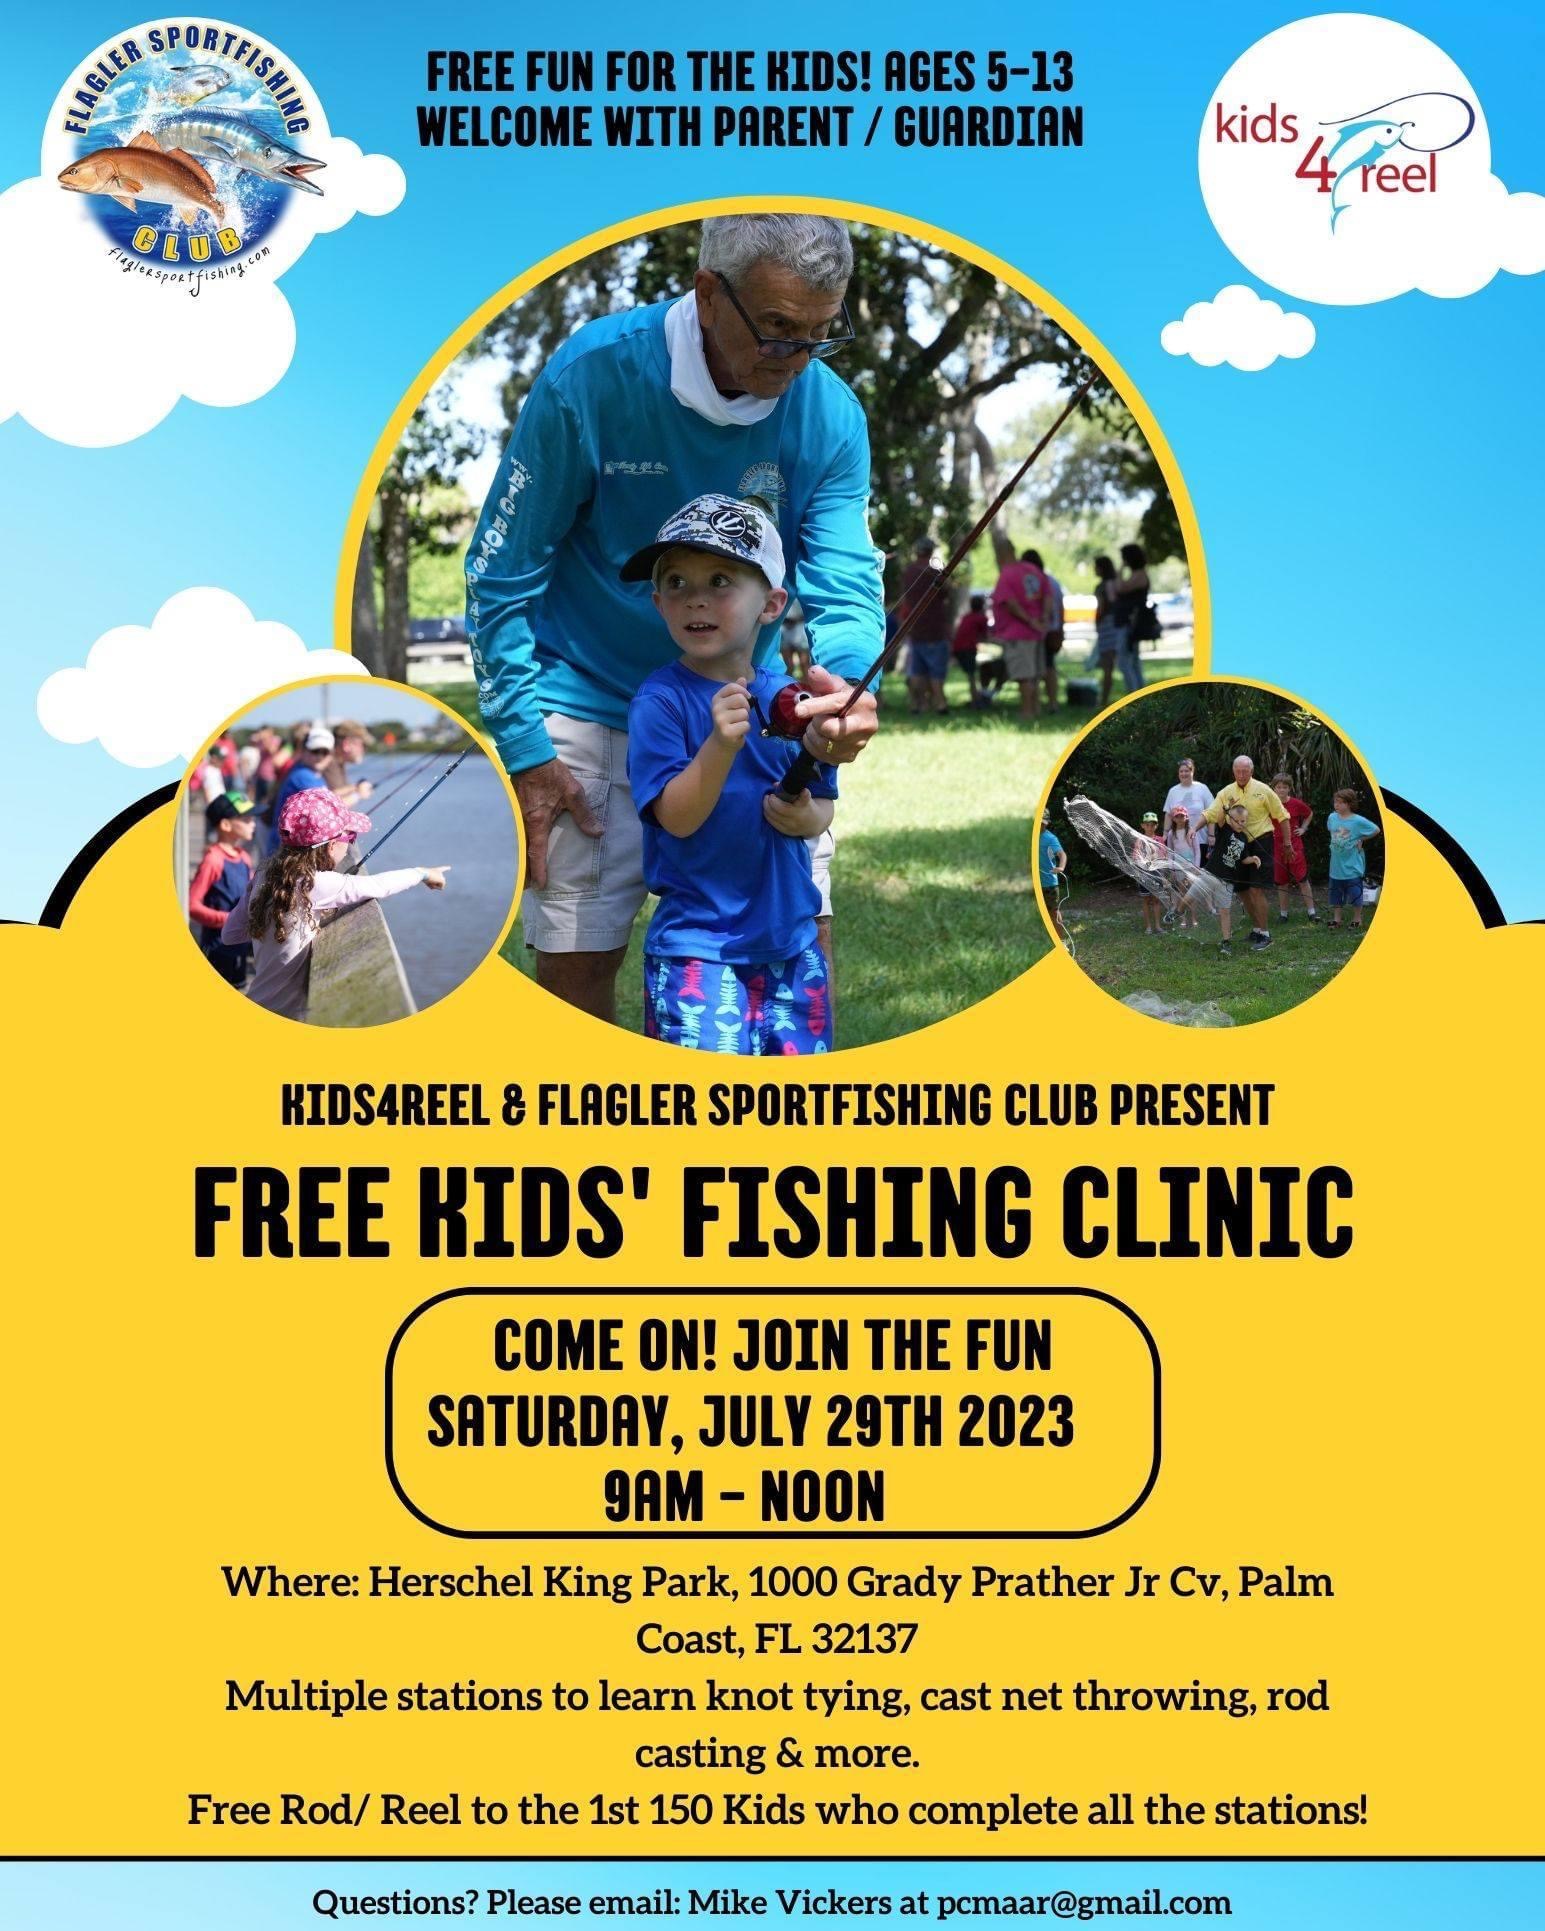 Flagler Sportfishing Club Hosts Exciting Free Kids Fishing Clinic